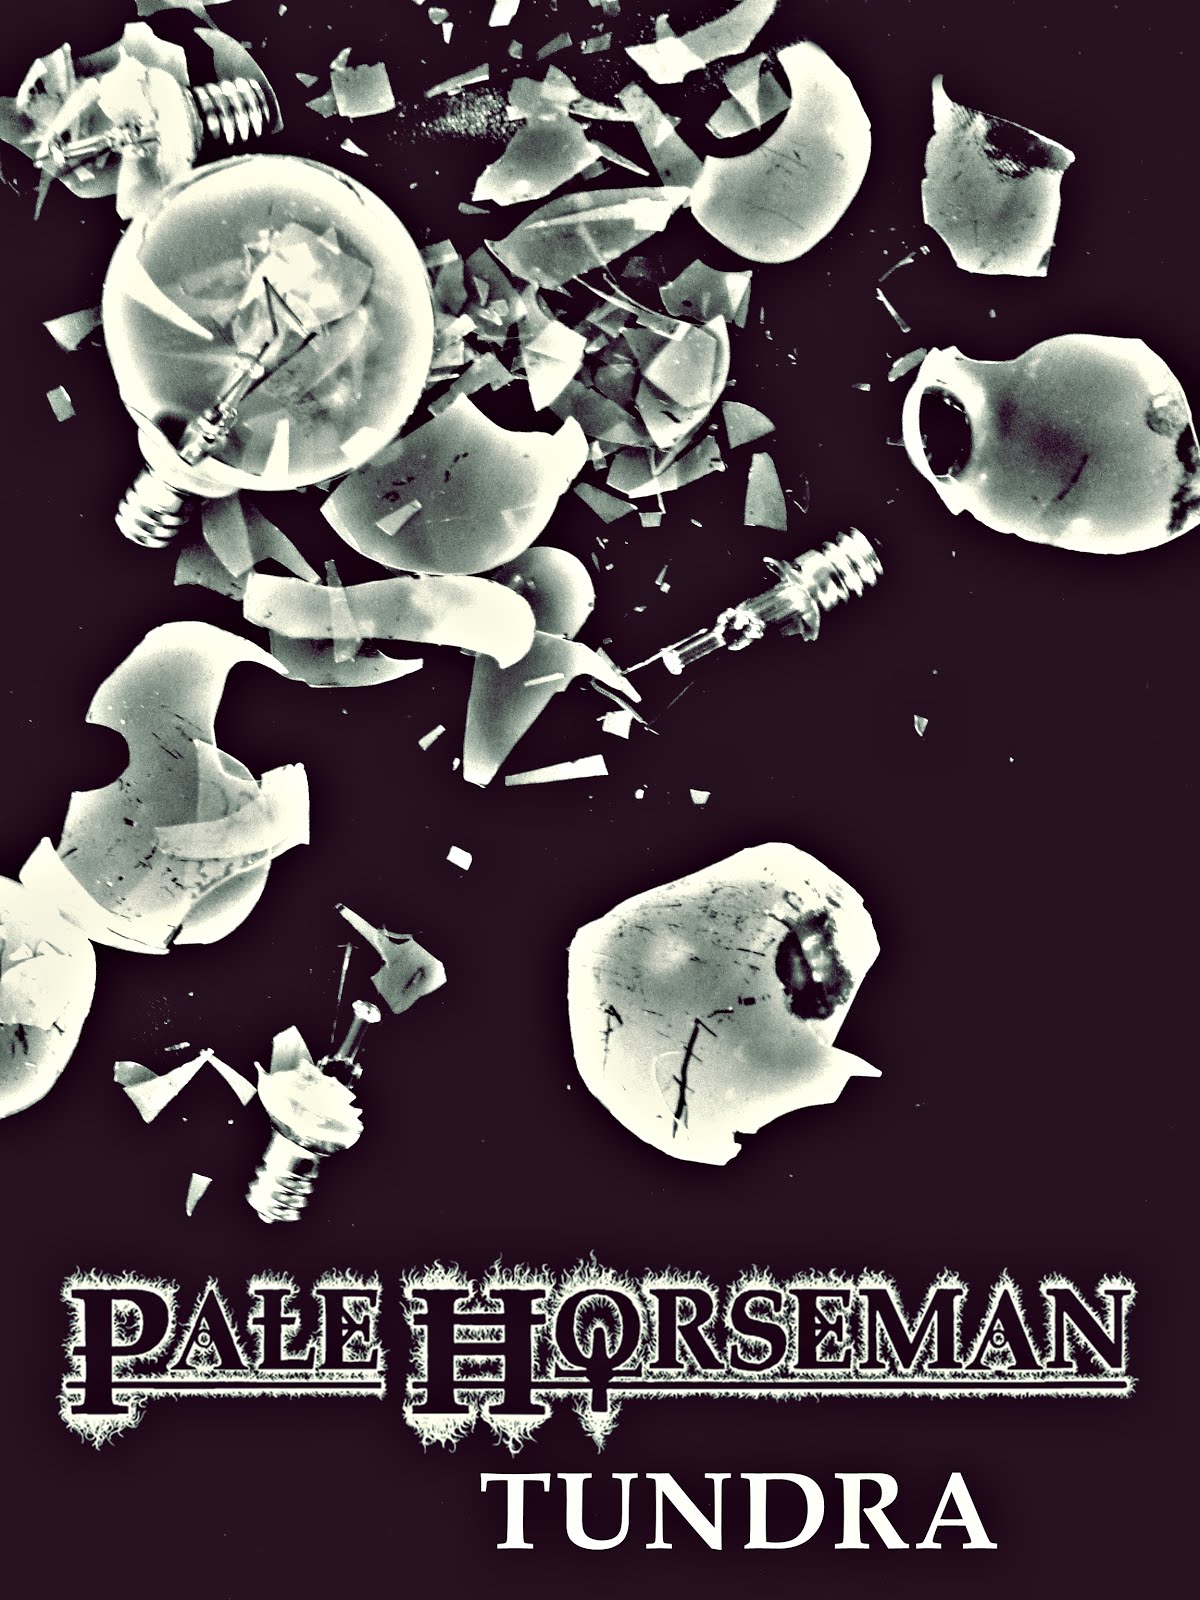 Pale Horseman "Tundra" music video (2020)